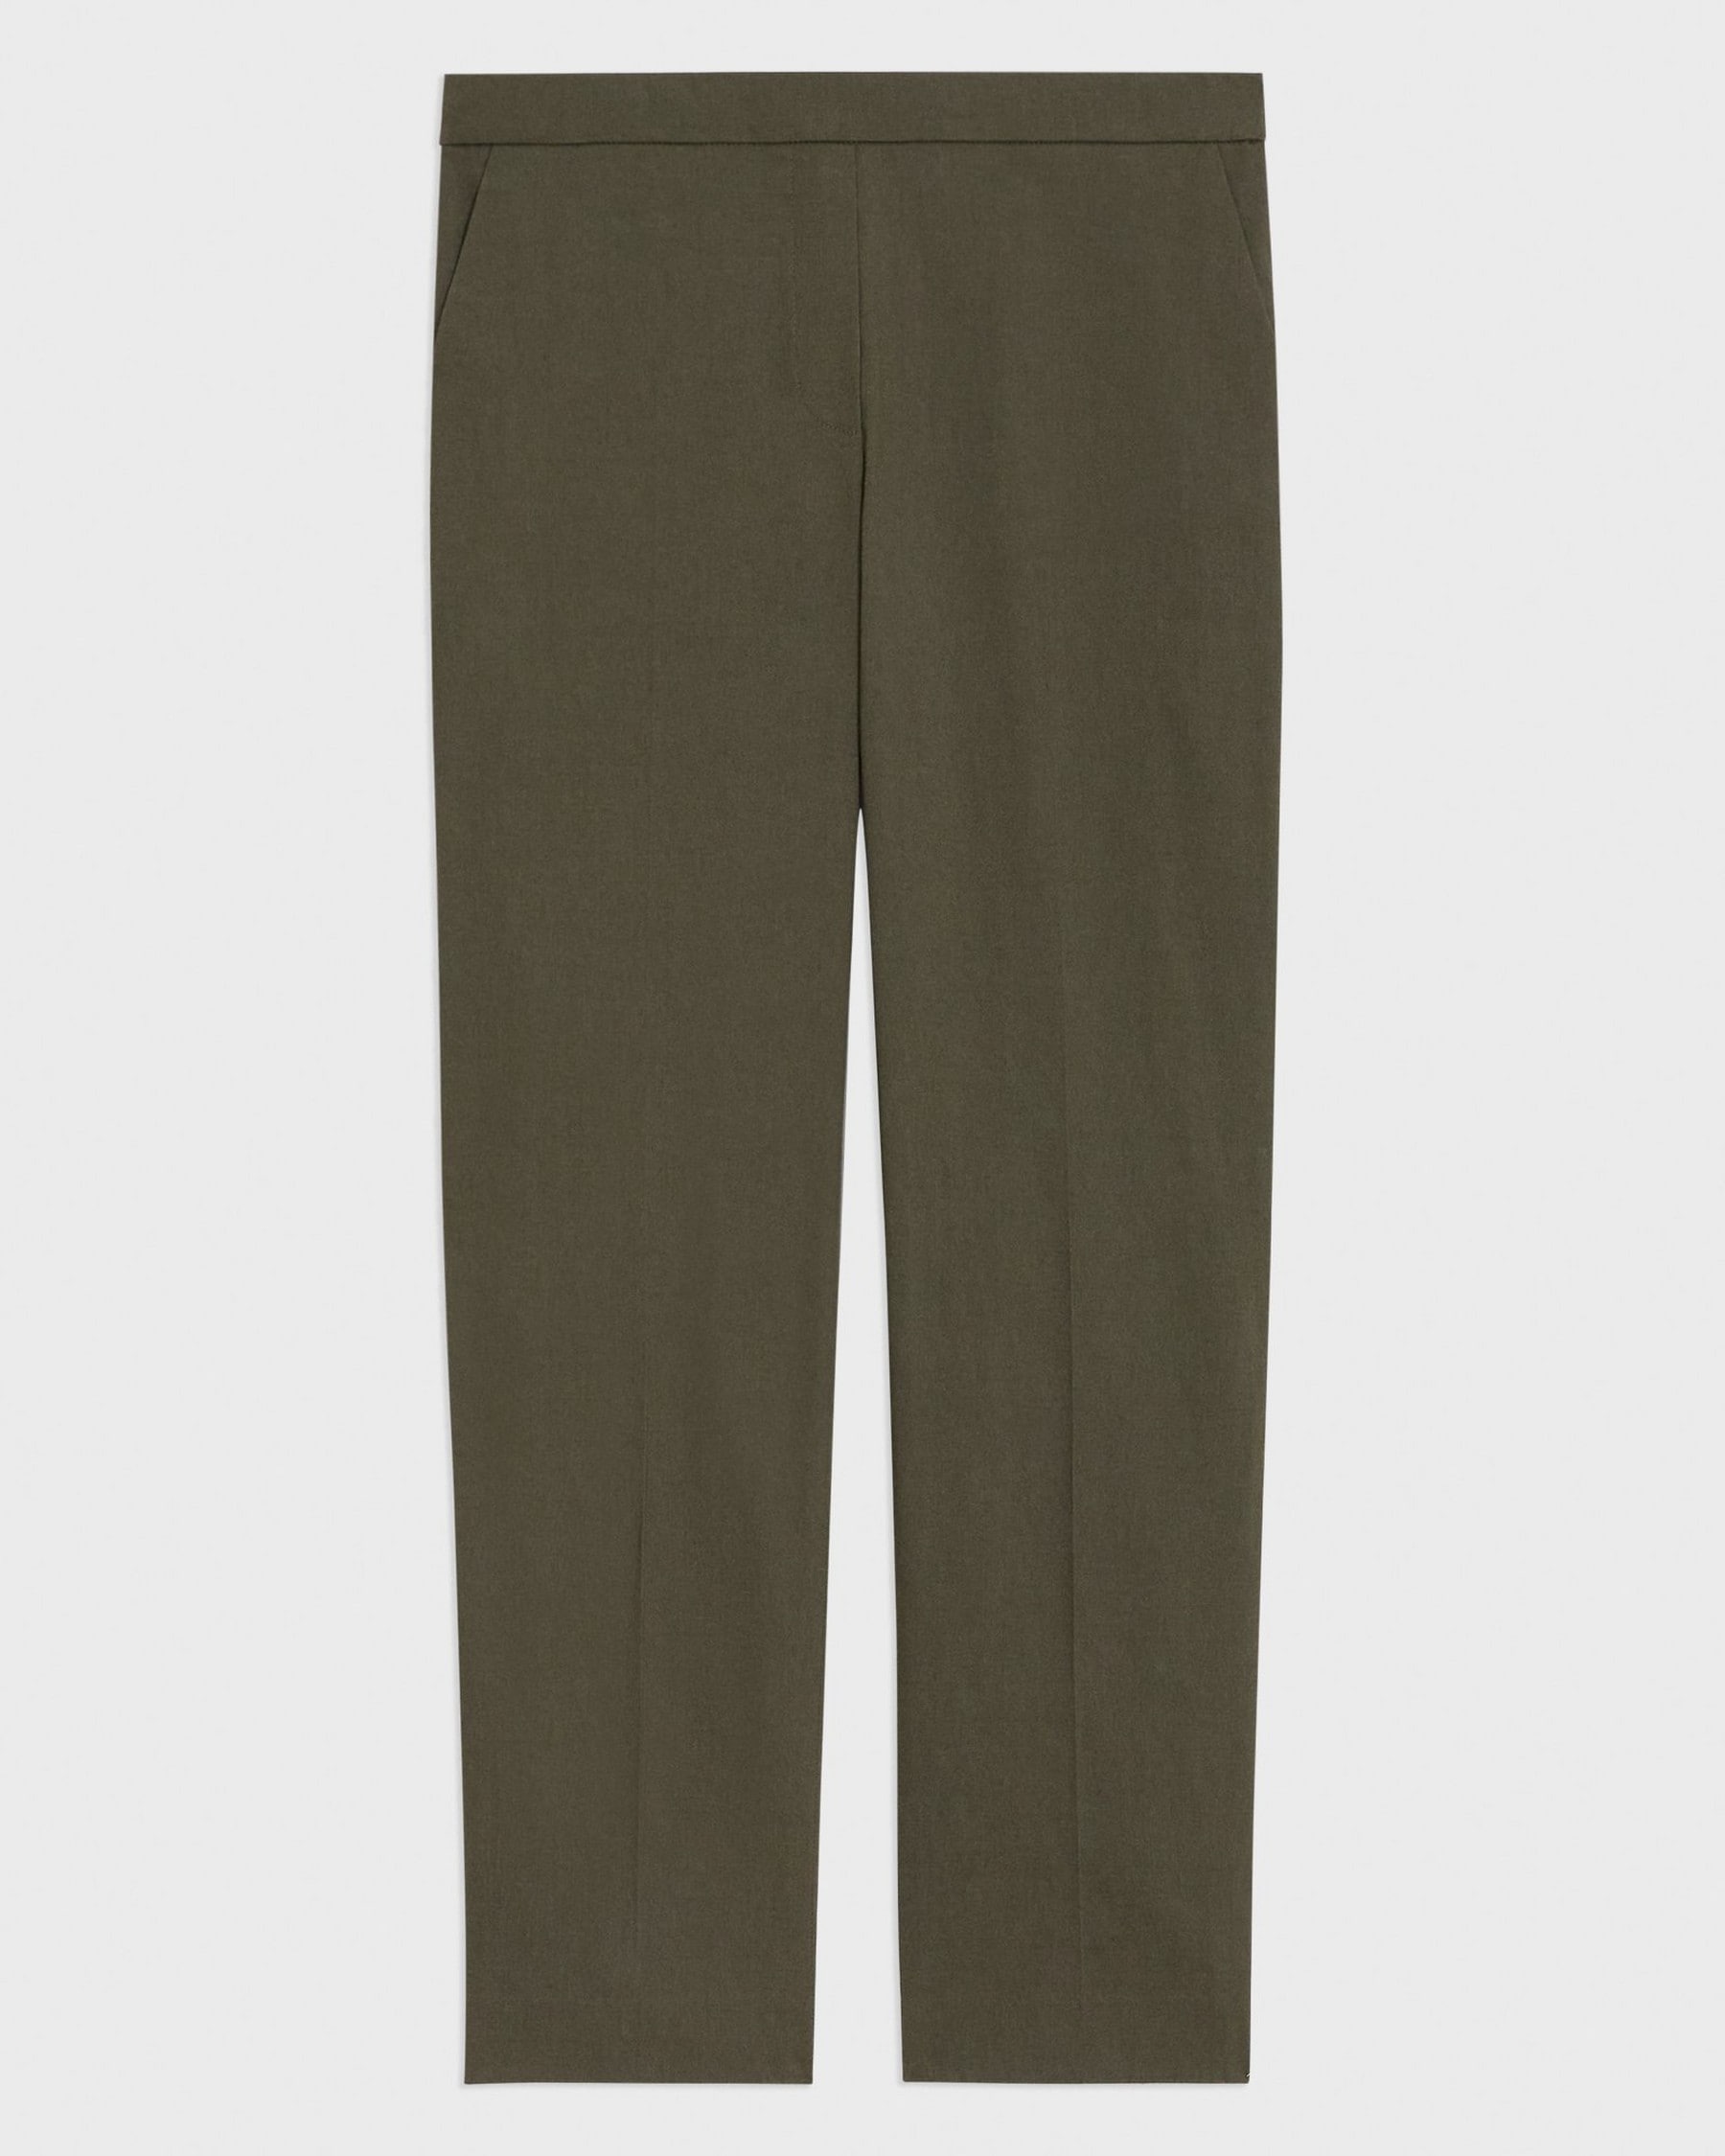 Treeca Pull-On Pant in Good Linen